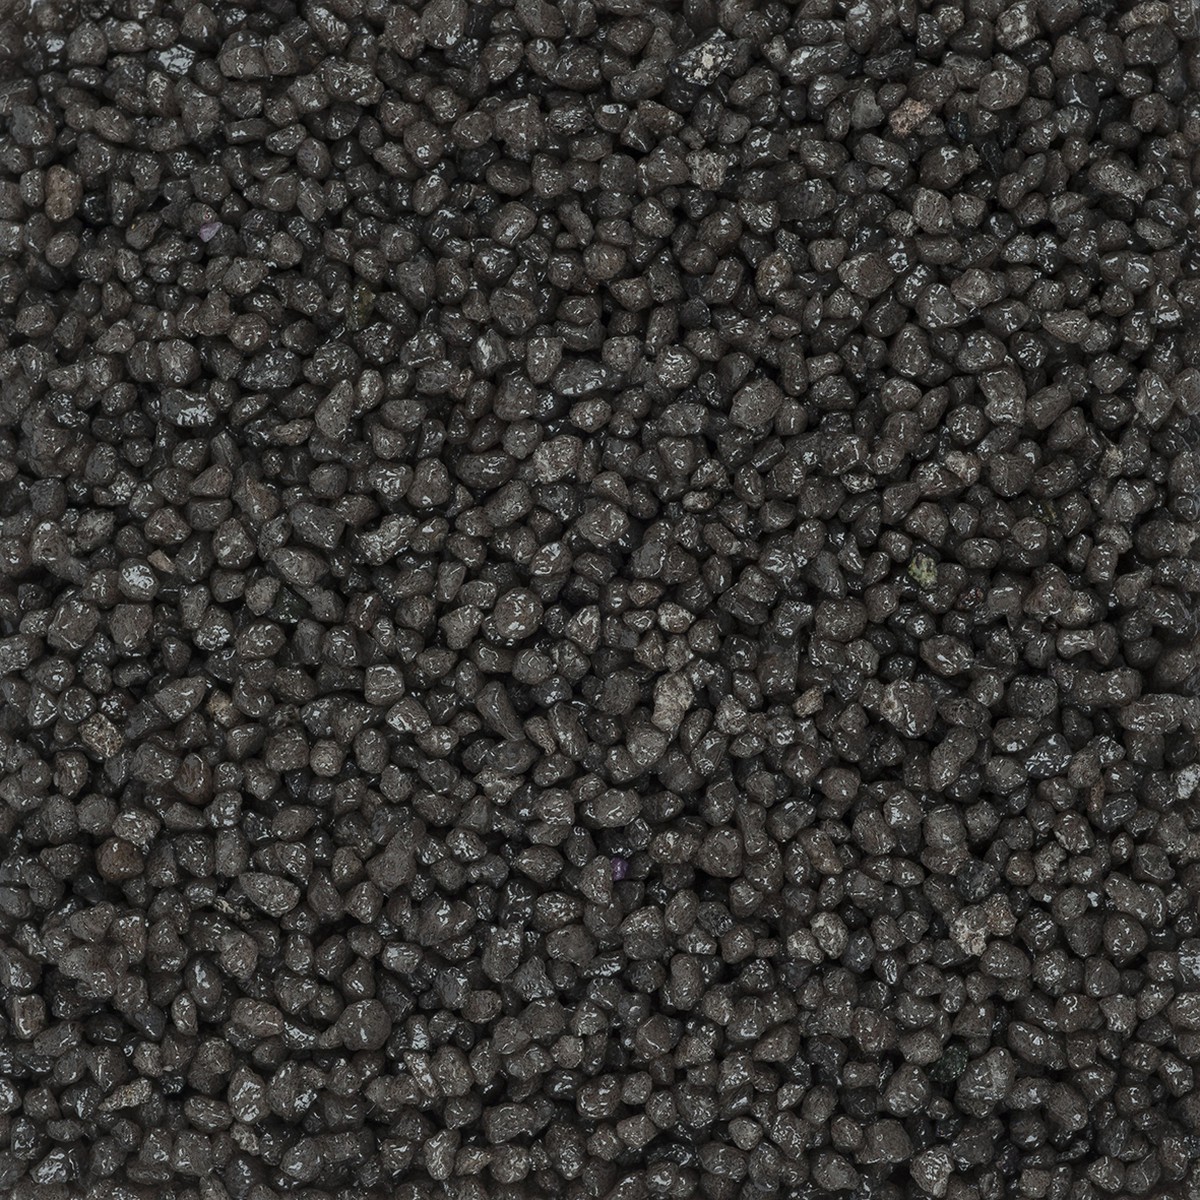   Granulés Anthrazit Gris anthracite 550ml 2-3mm